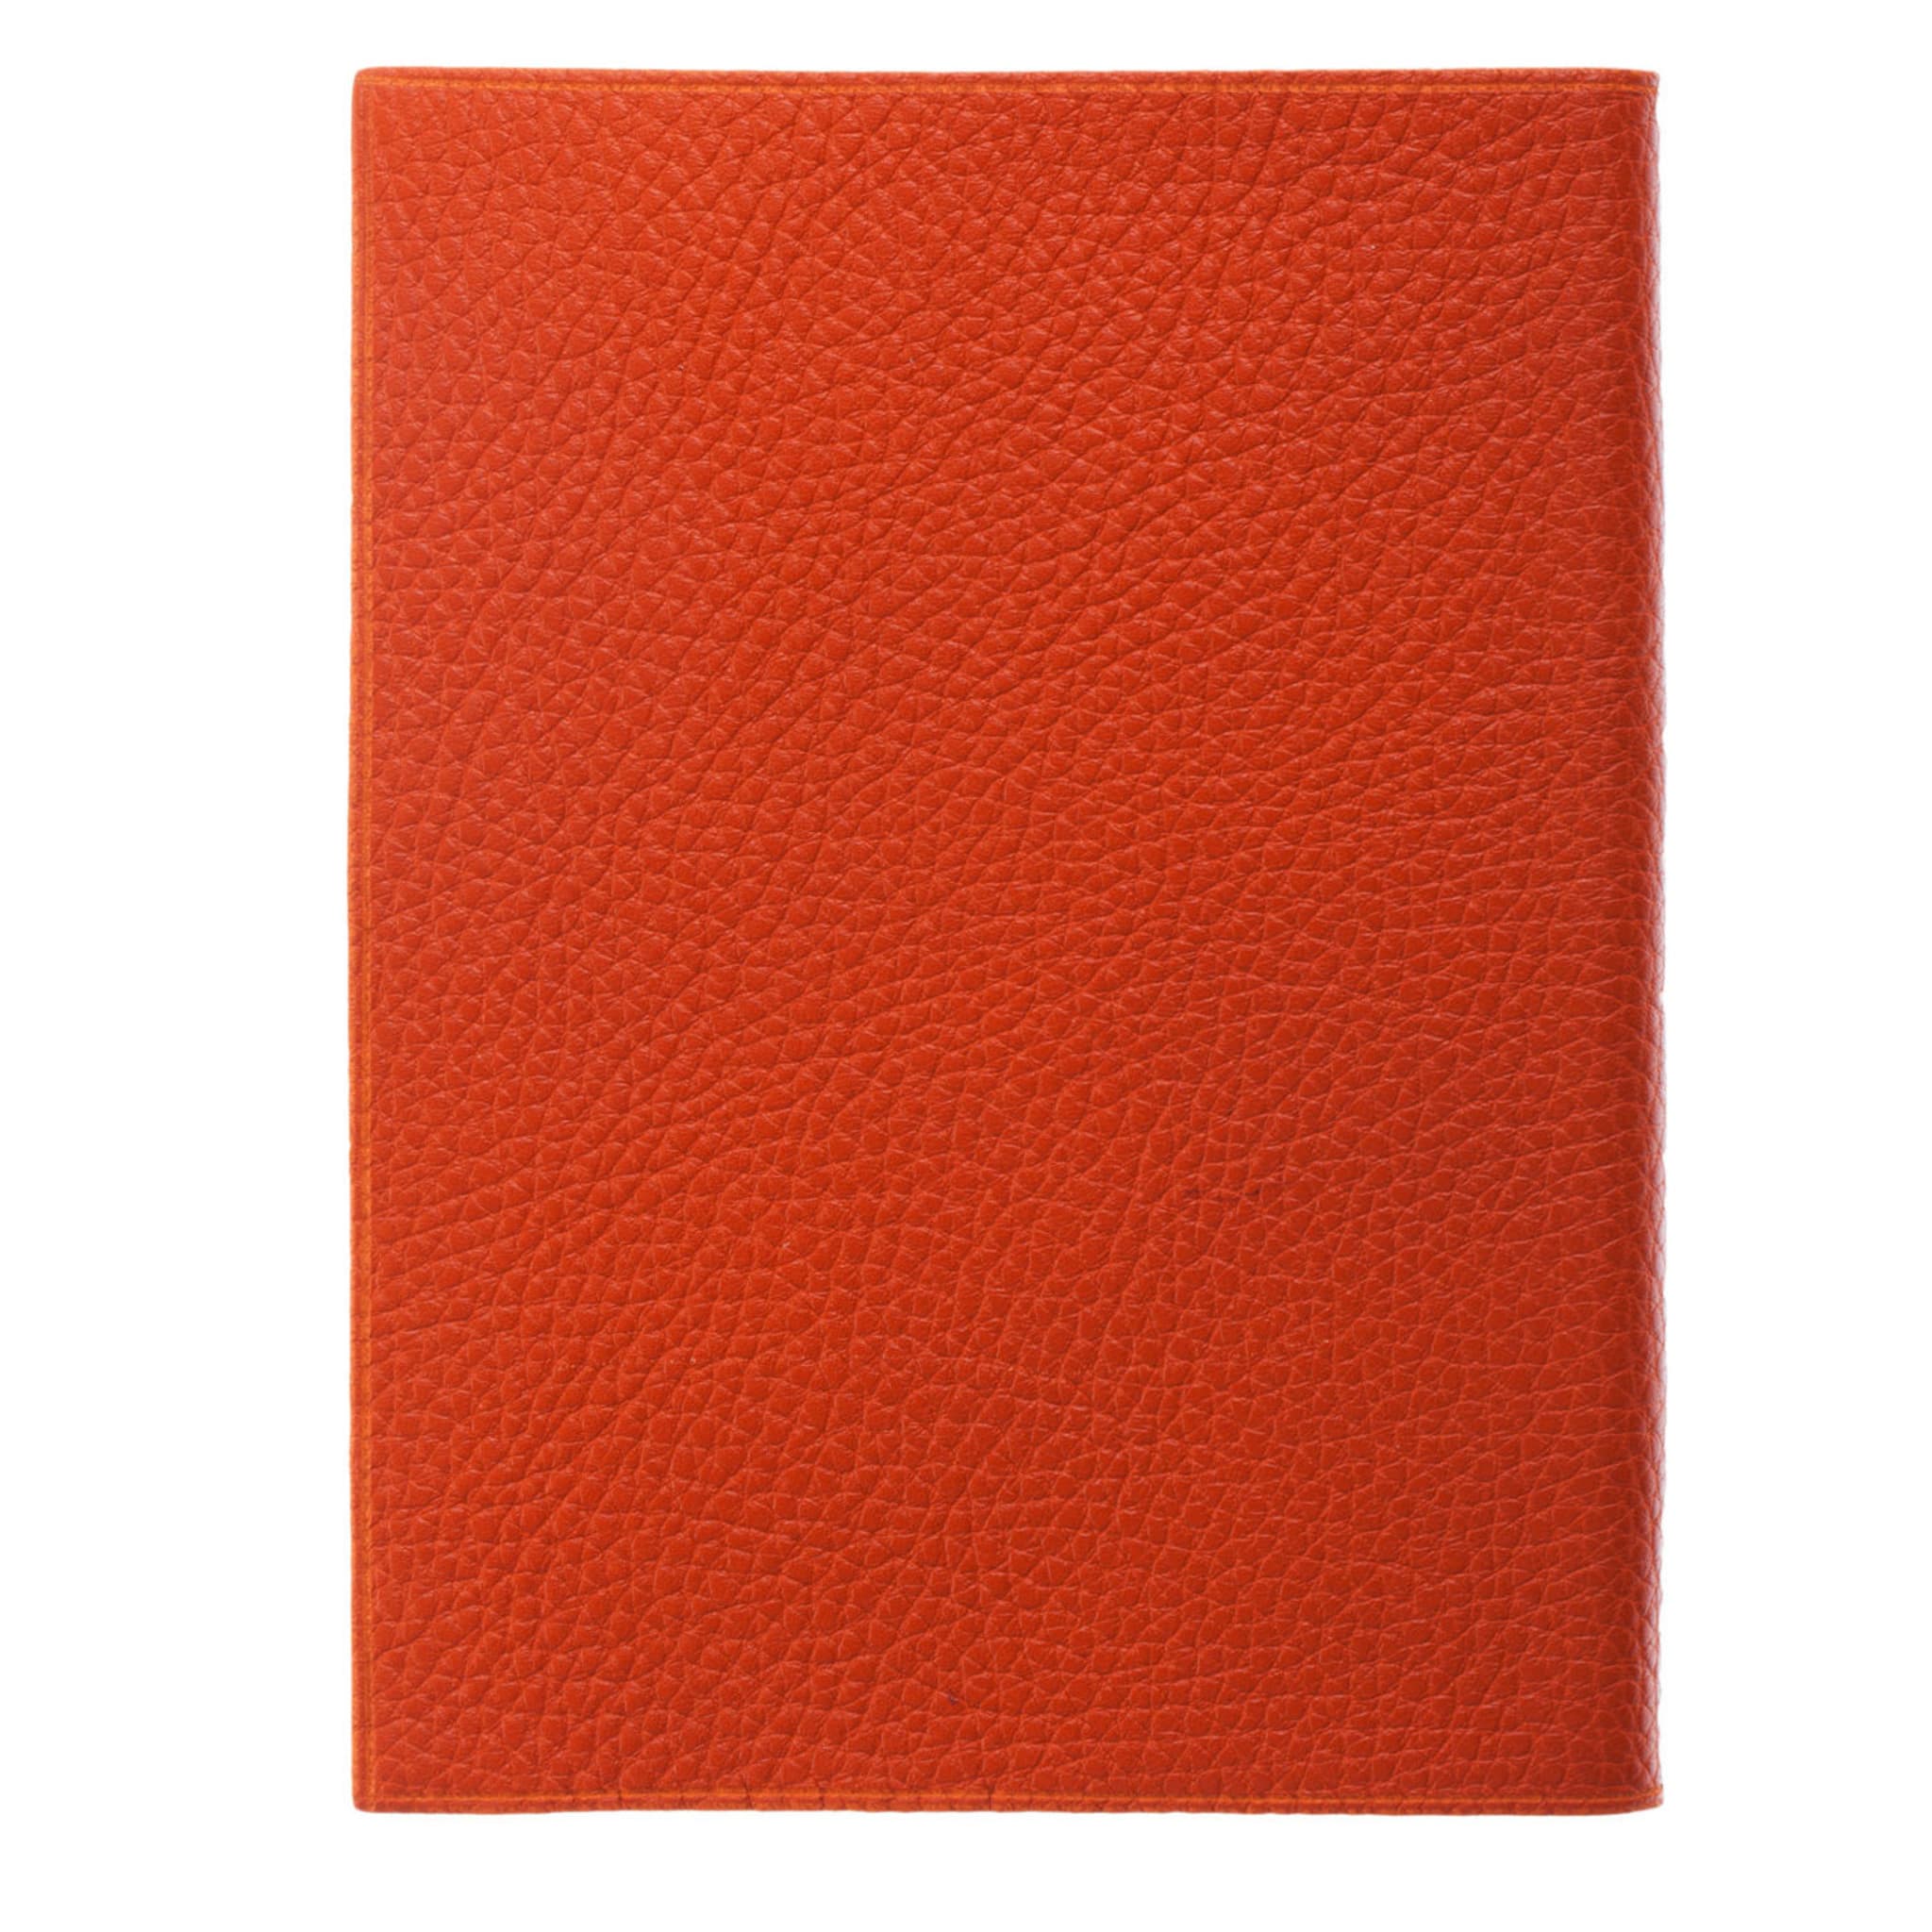 Arancia Leather Notebook - Alternative view 2